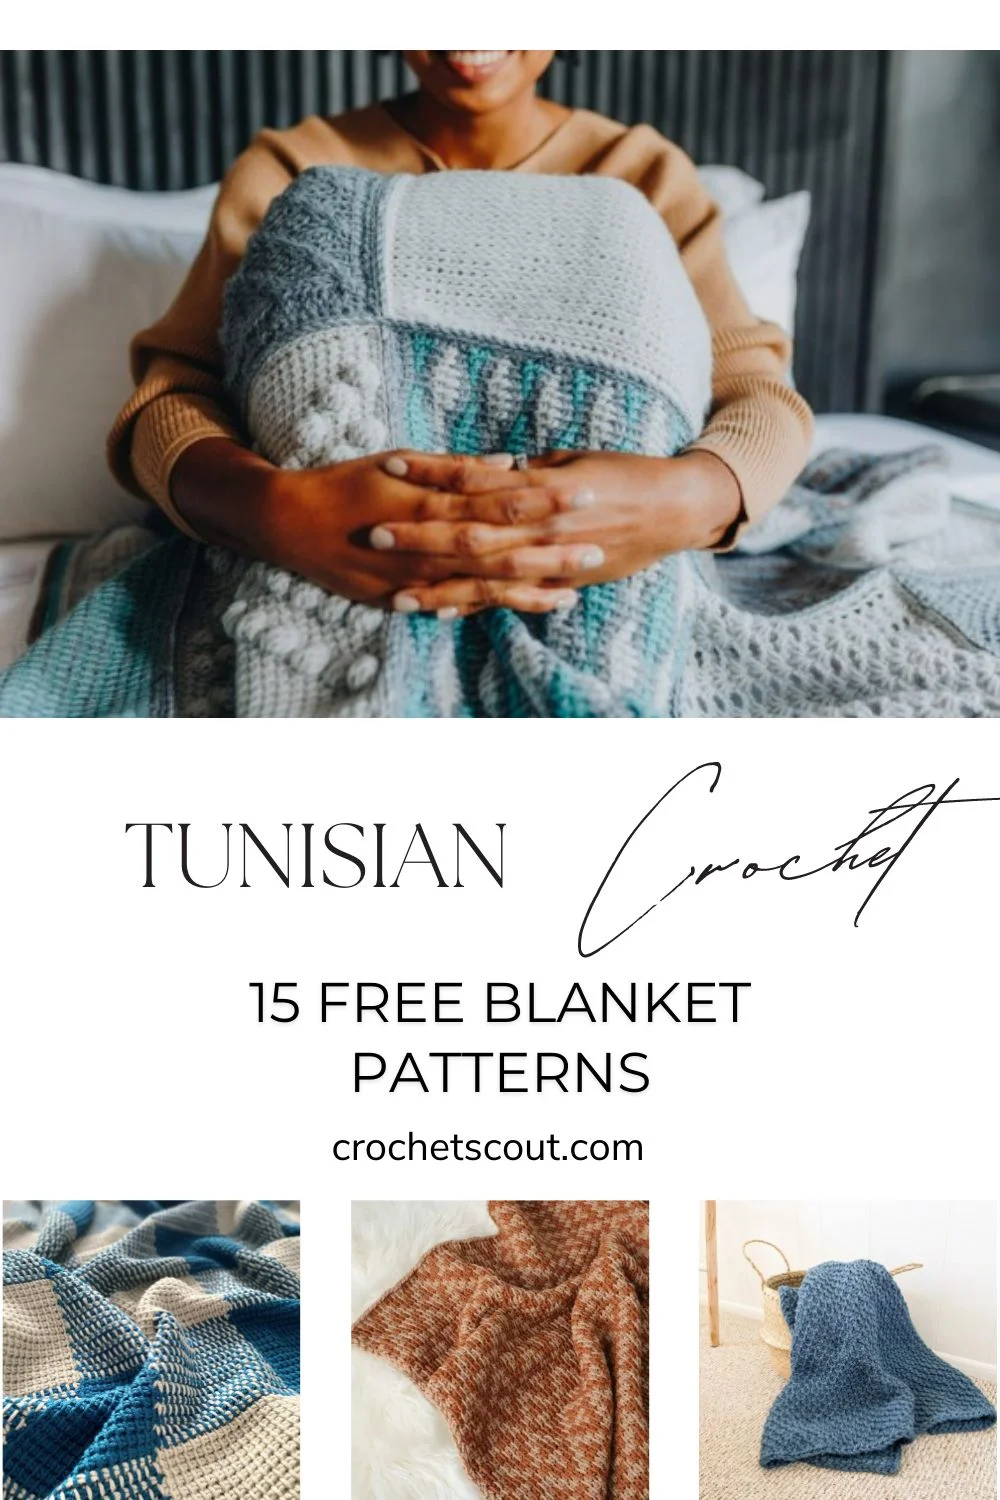 15 Free Tunisian Crochet Blanket Patterns